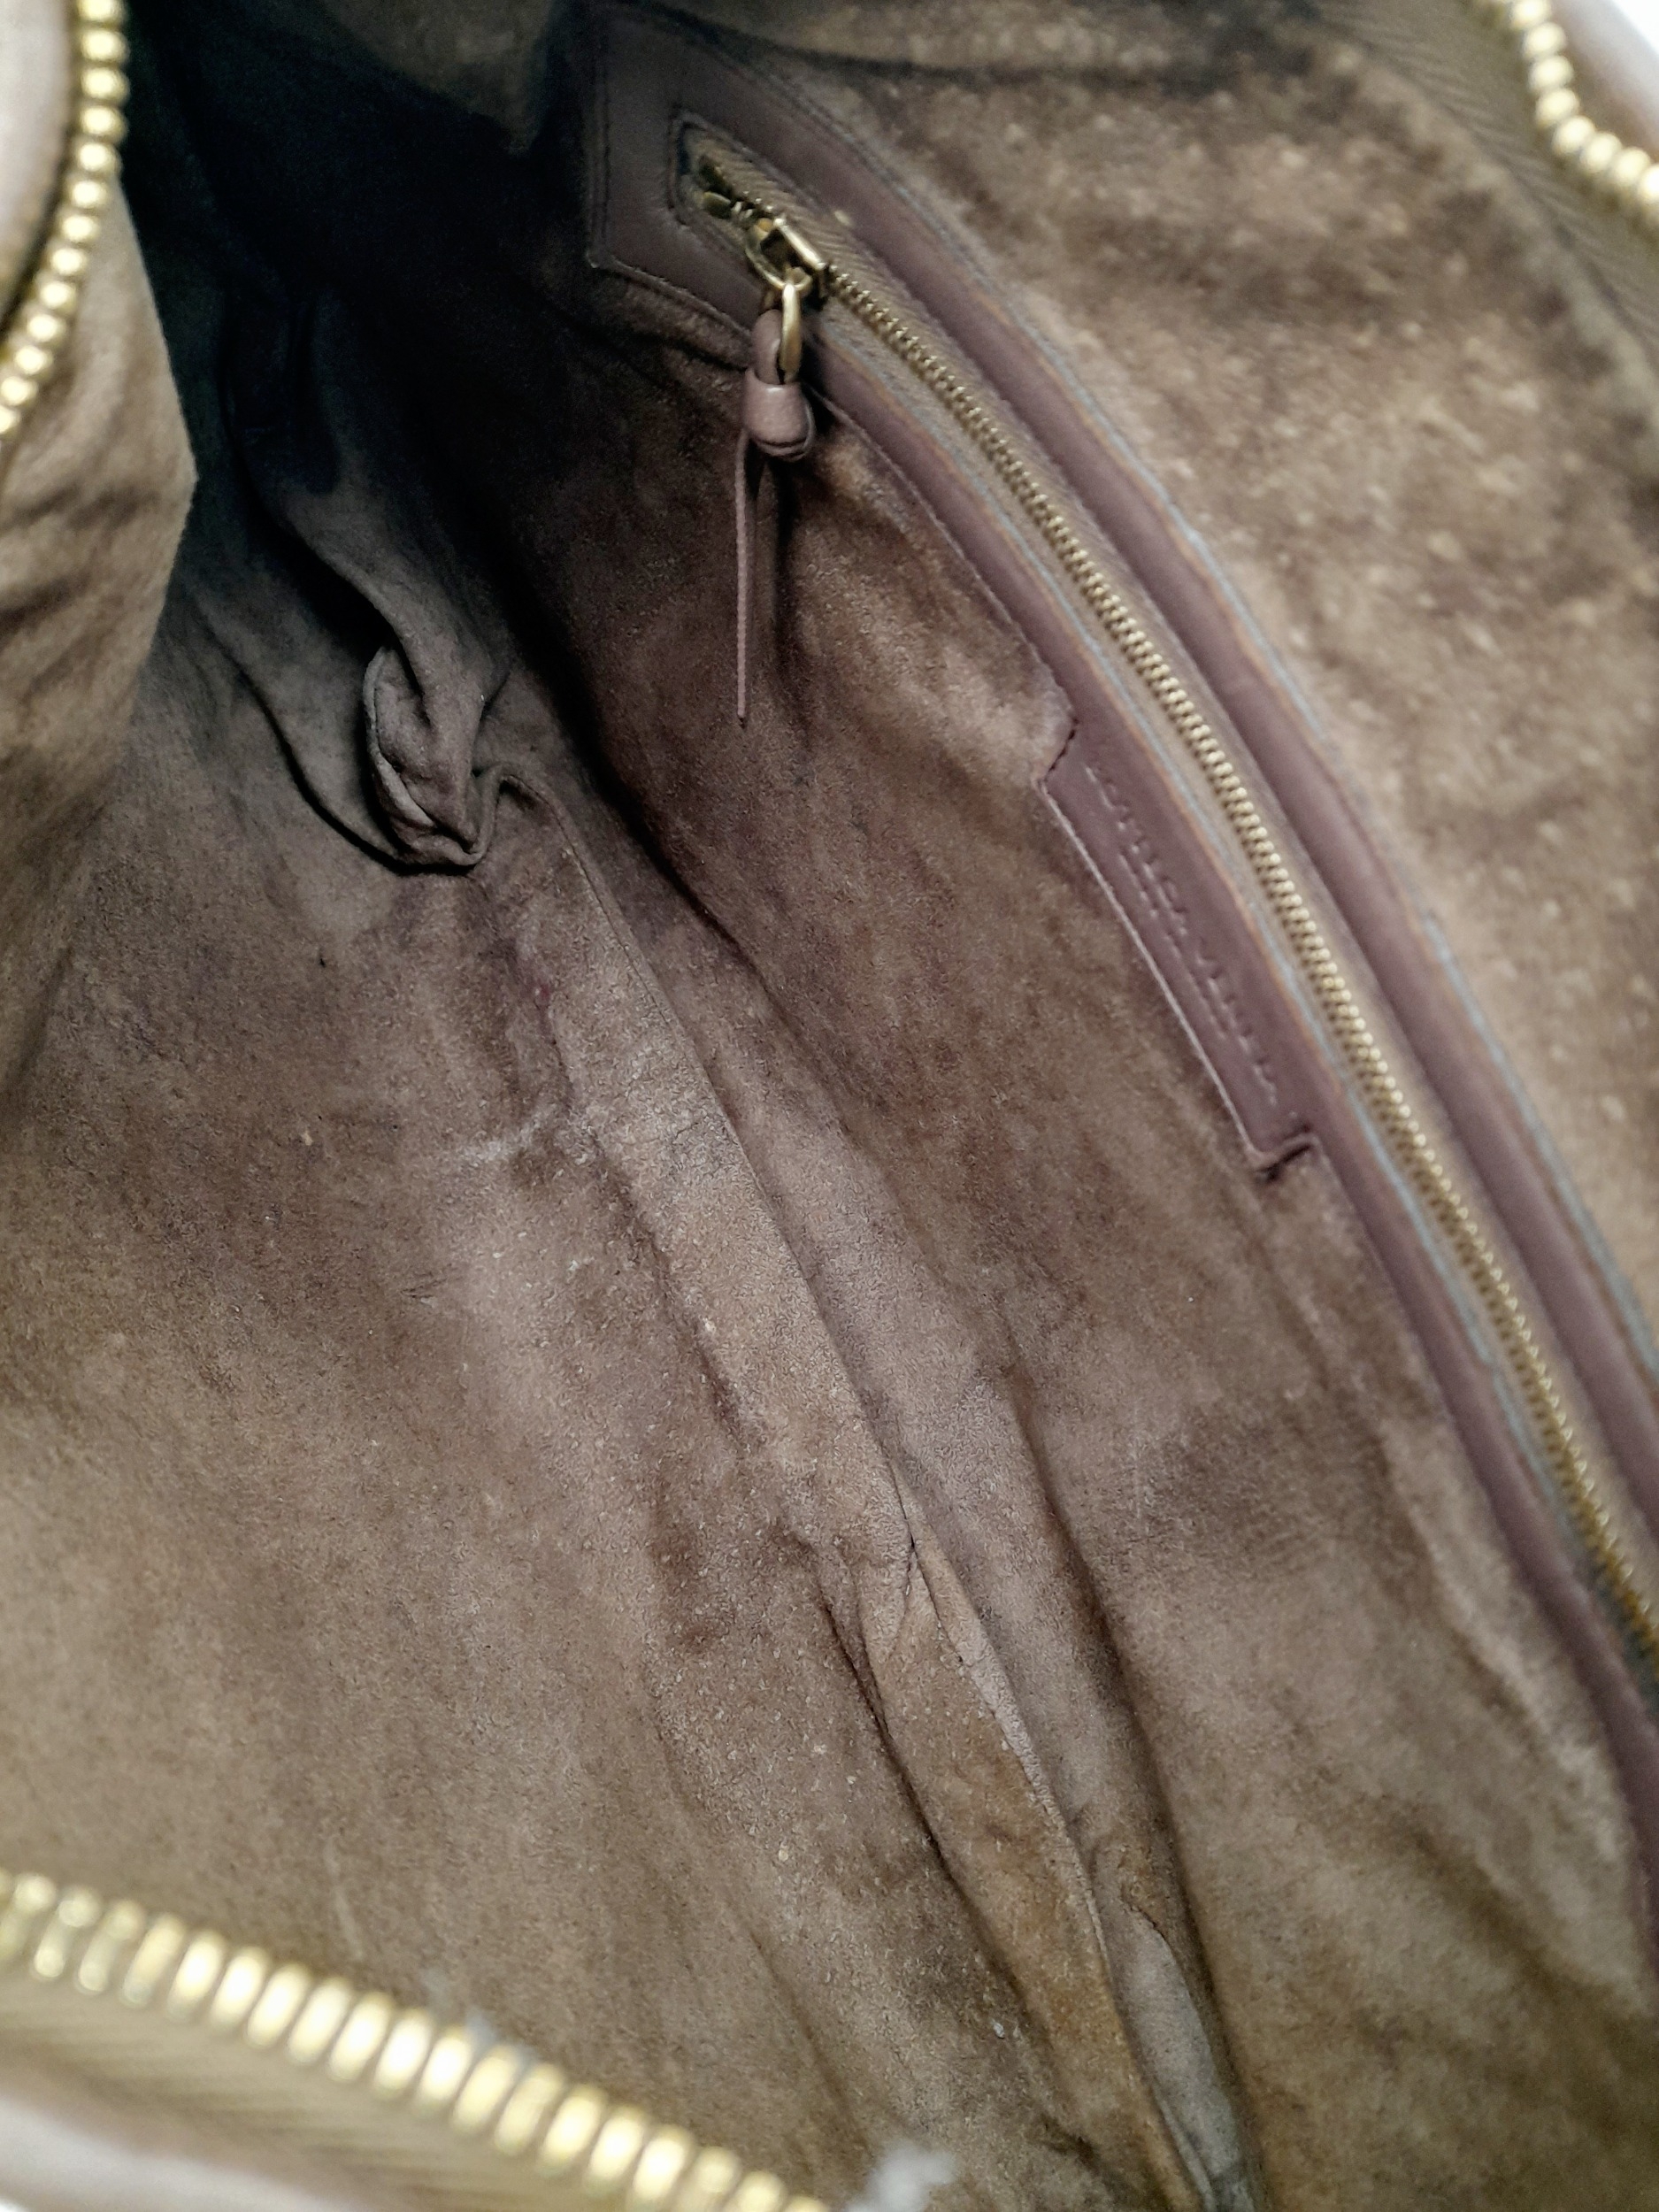 A Bottega Veneta Brown Bag. Intrecciato leather exterior with gold-toned hardware, single handle/ - Image 6 of 8